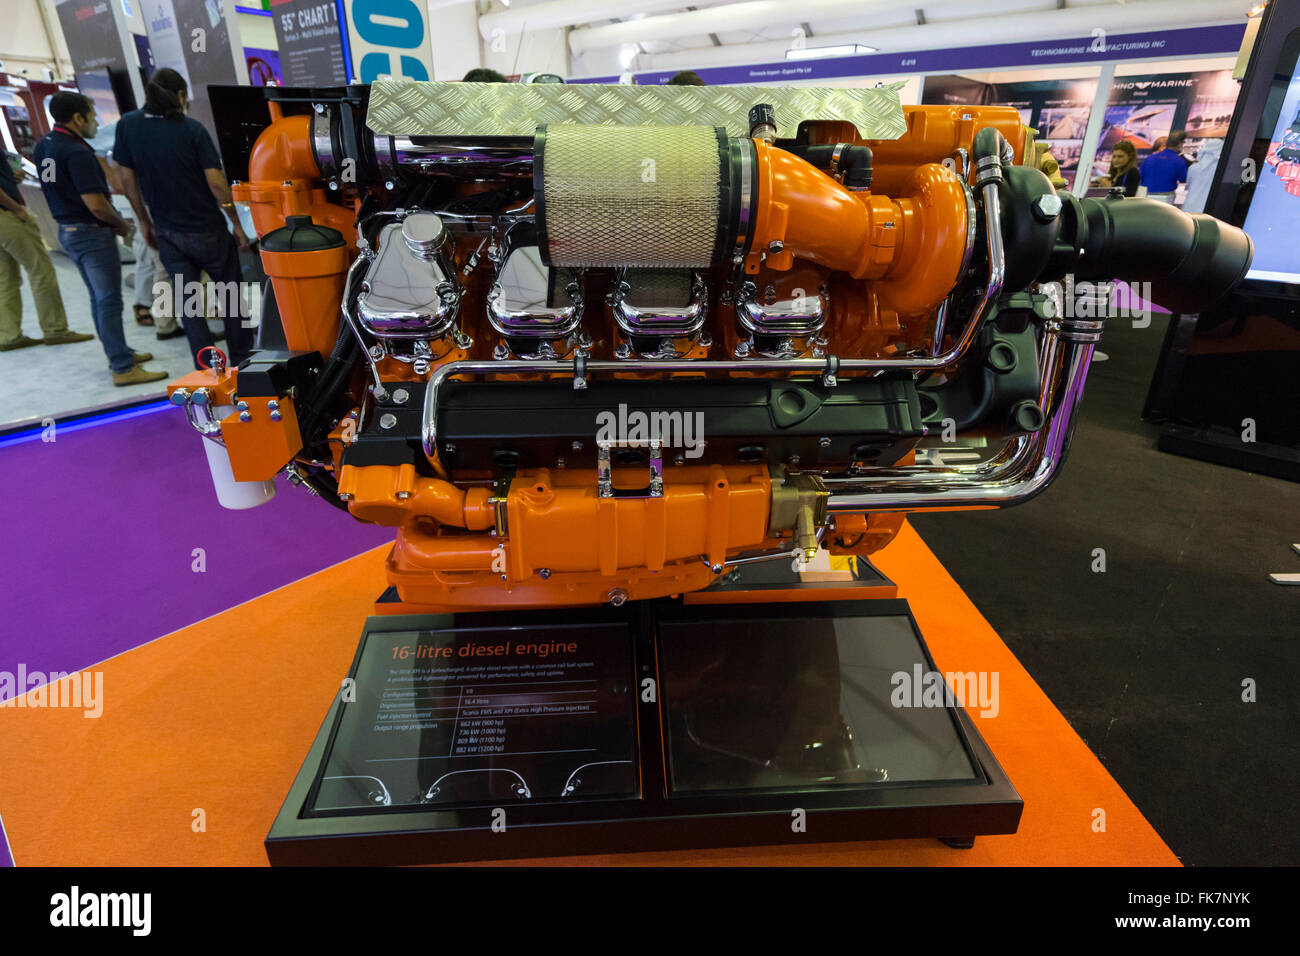 Large 16 litre marine V8diesel engine manufactured by Scania on display at Dubai International Boat Show 2016 , United Arab Emir Stock Photo